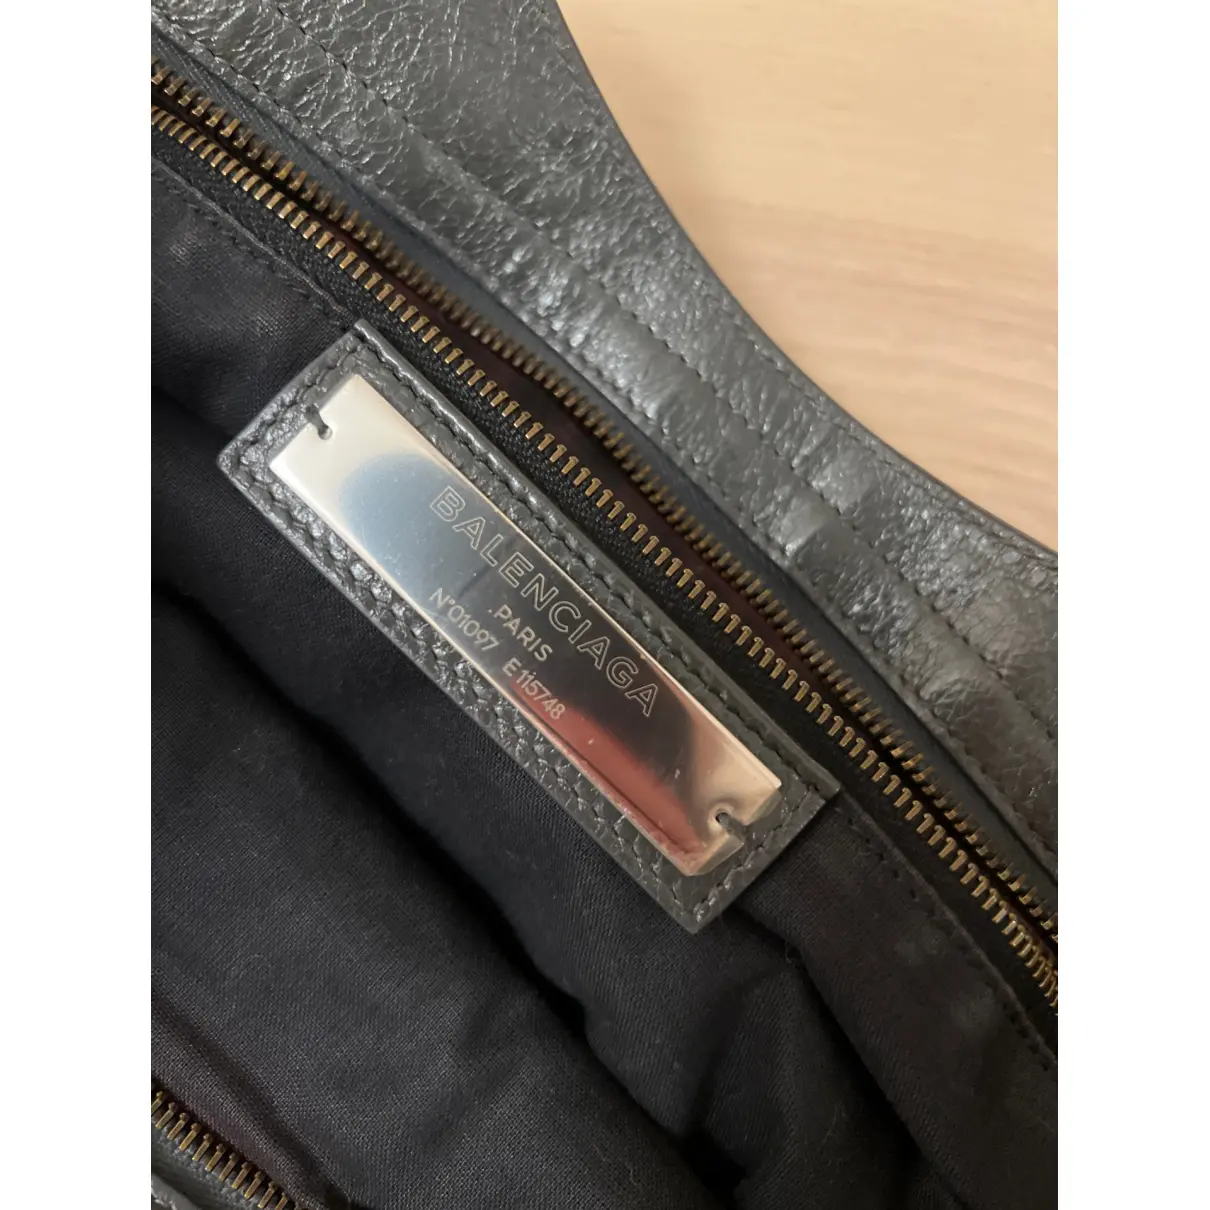 Buy Balenciaga City leather handbag online